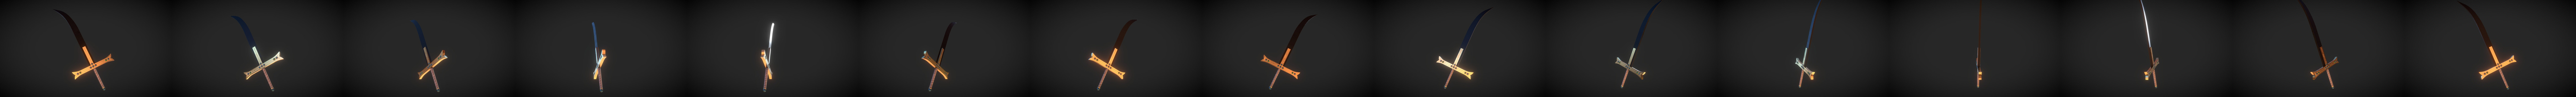 Mihawk's Yoru Sword - Creations Feedback - Developer Forum